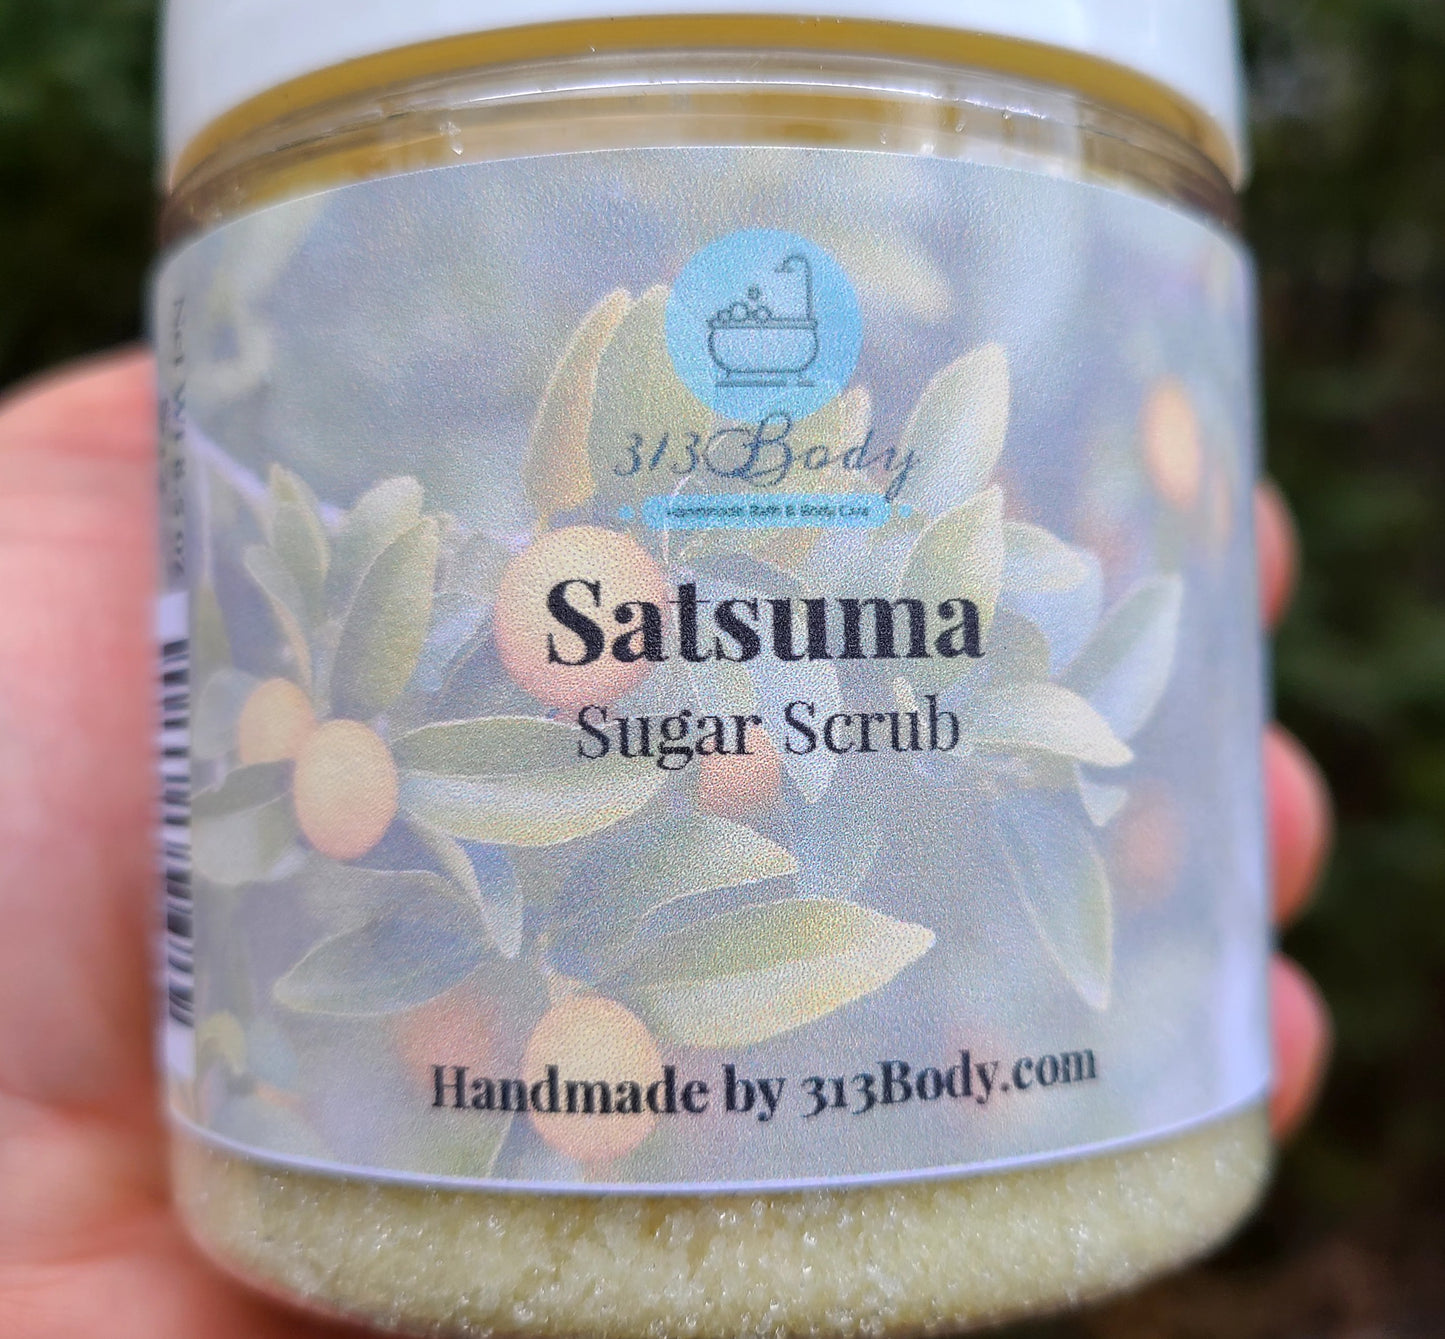 Satsuma Sugar Scrub with Shea Butter and Avocado Oil